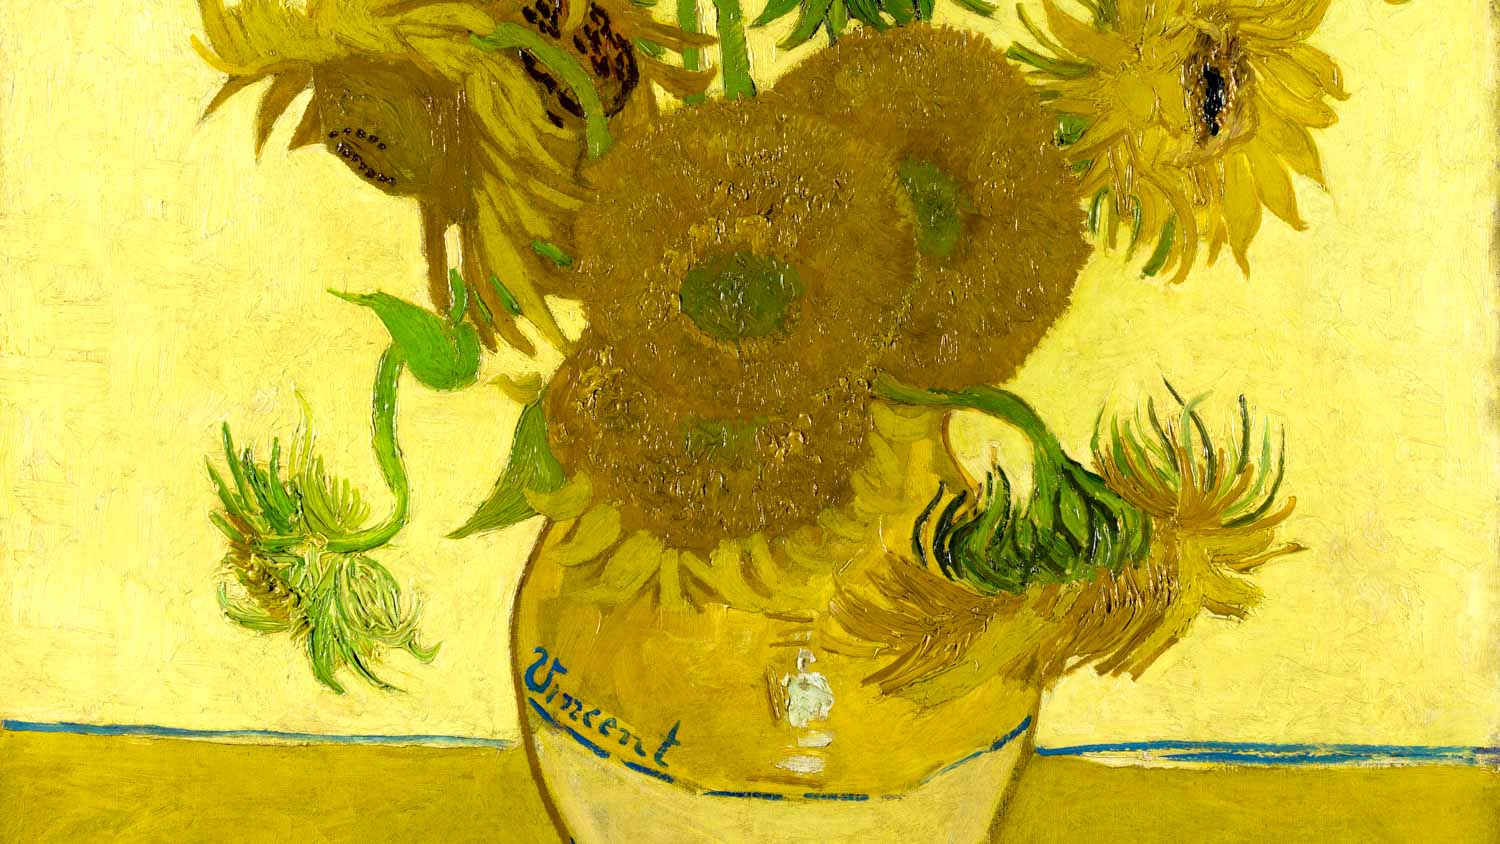 Vincent+Van+Gogh-1853-1890 (400).jpg